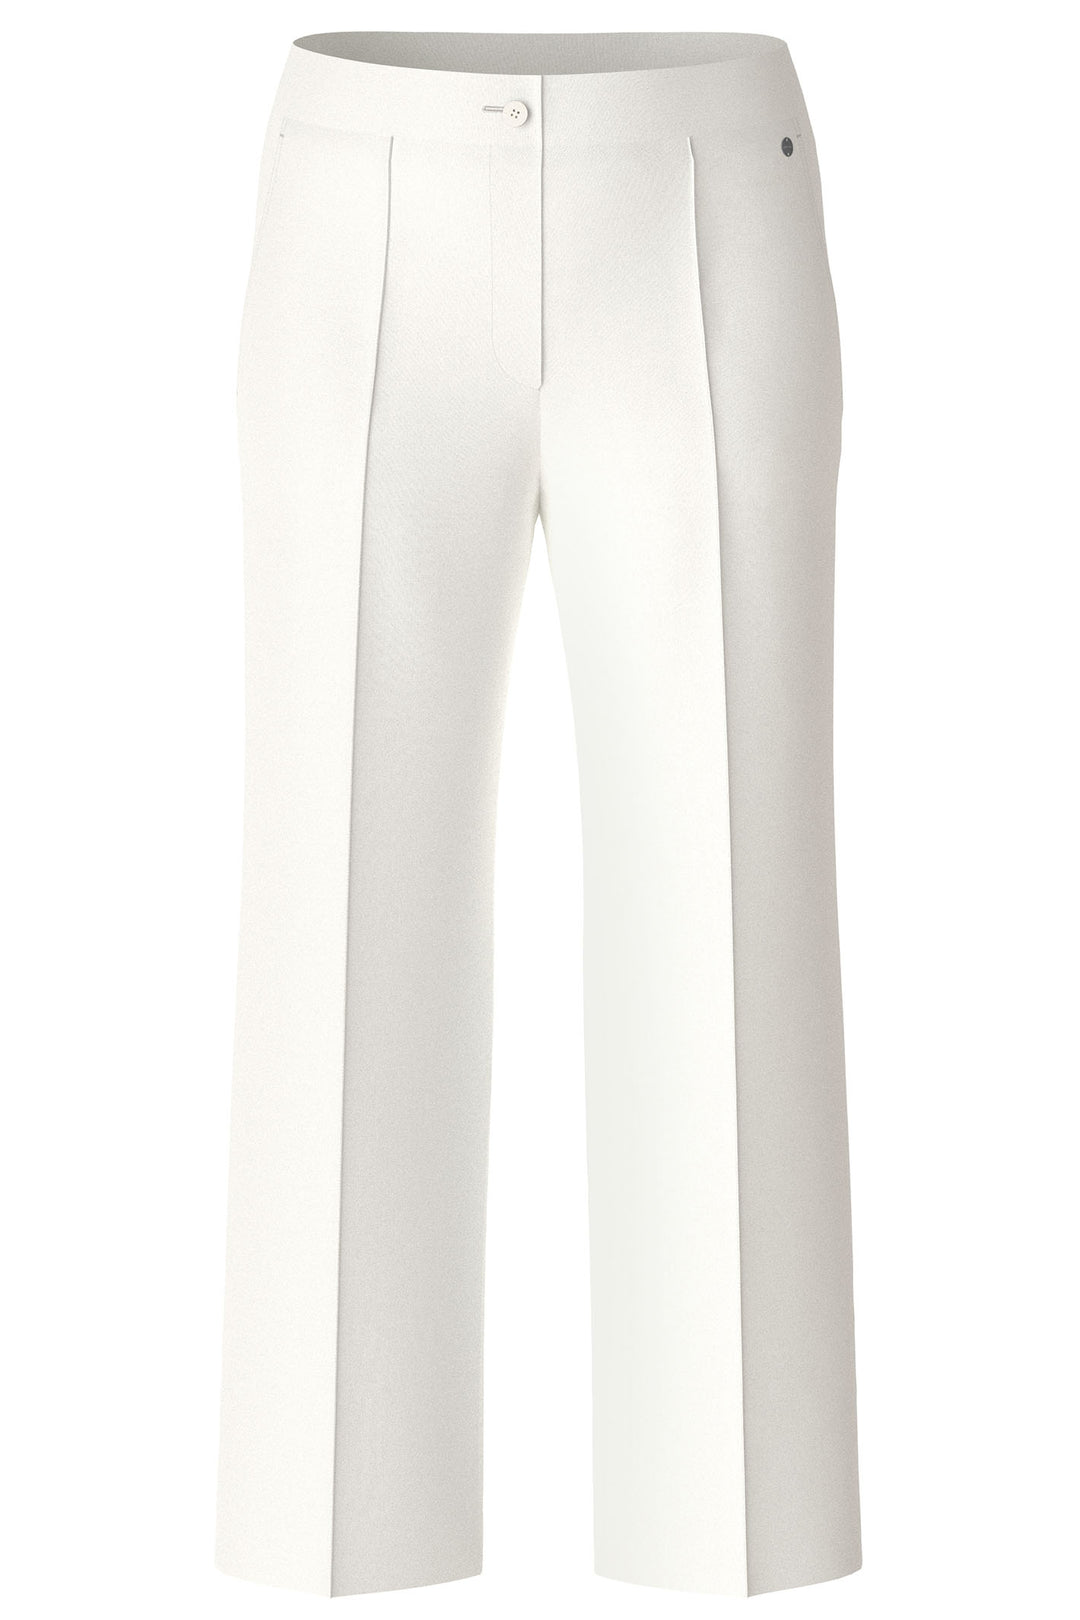 Marc Cain WC 81.30 J23 White Wide Leg Cropped Trousers - Olivia Grace Fashion